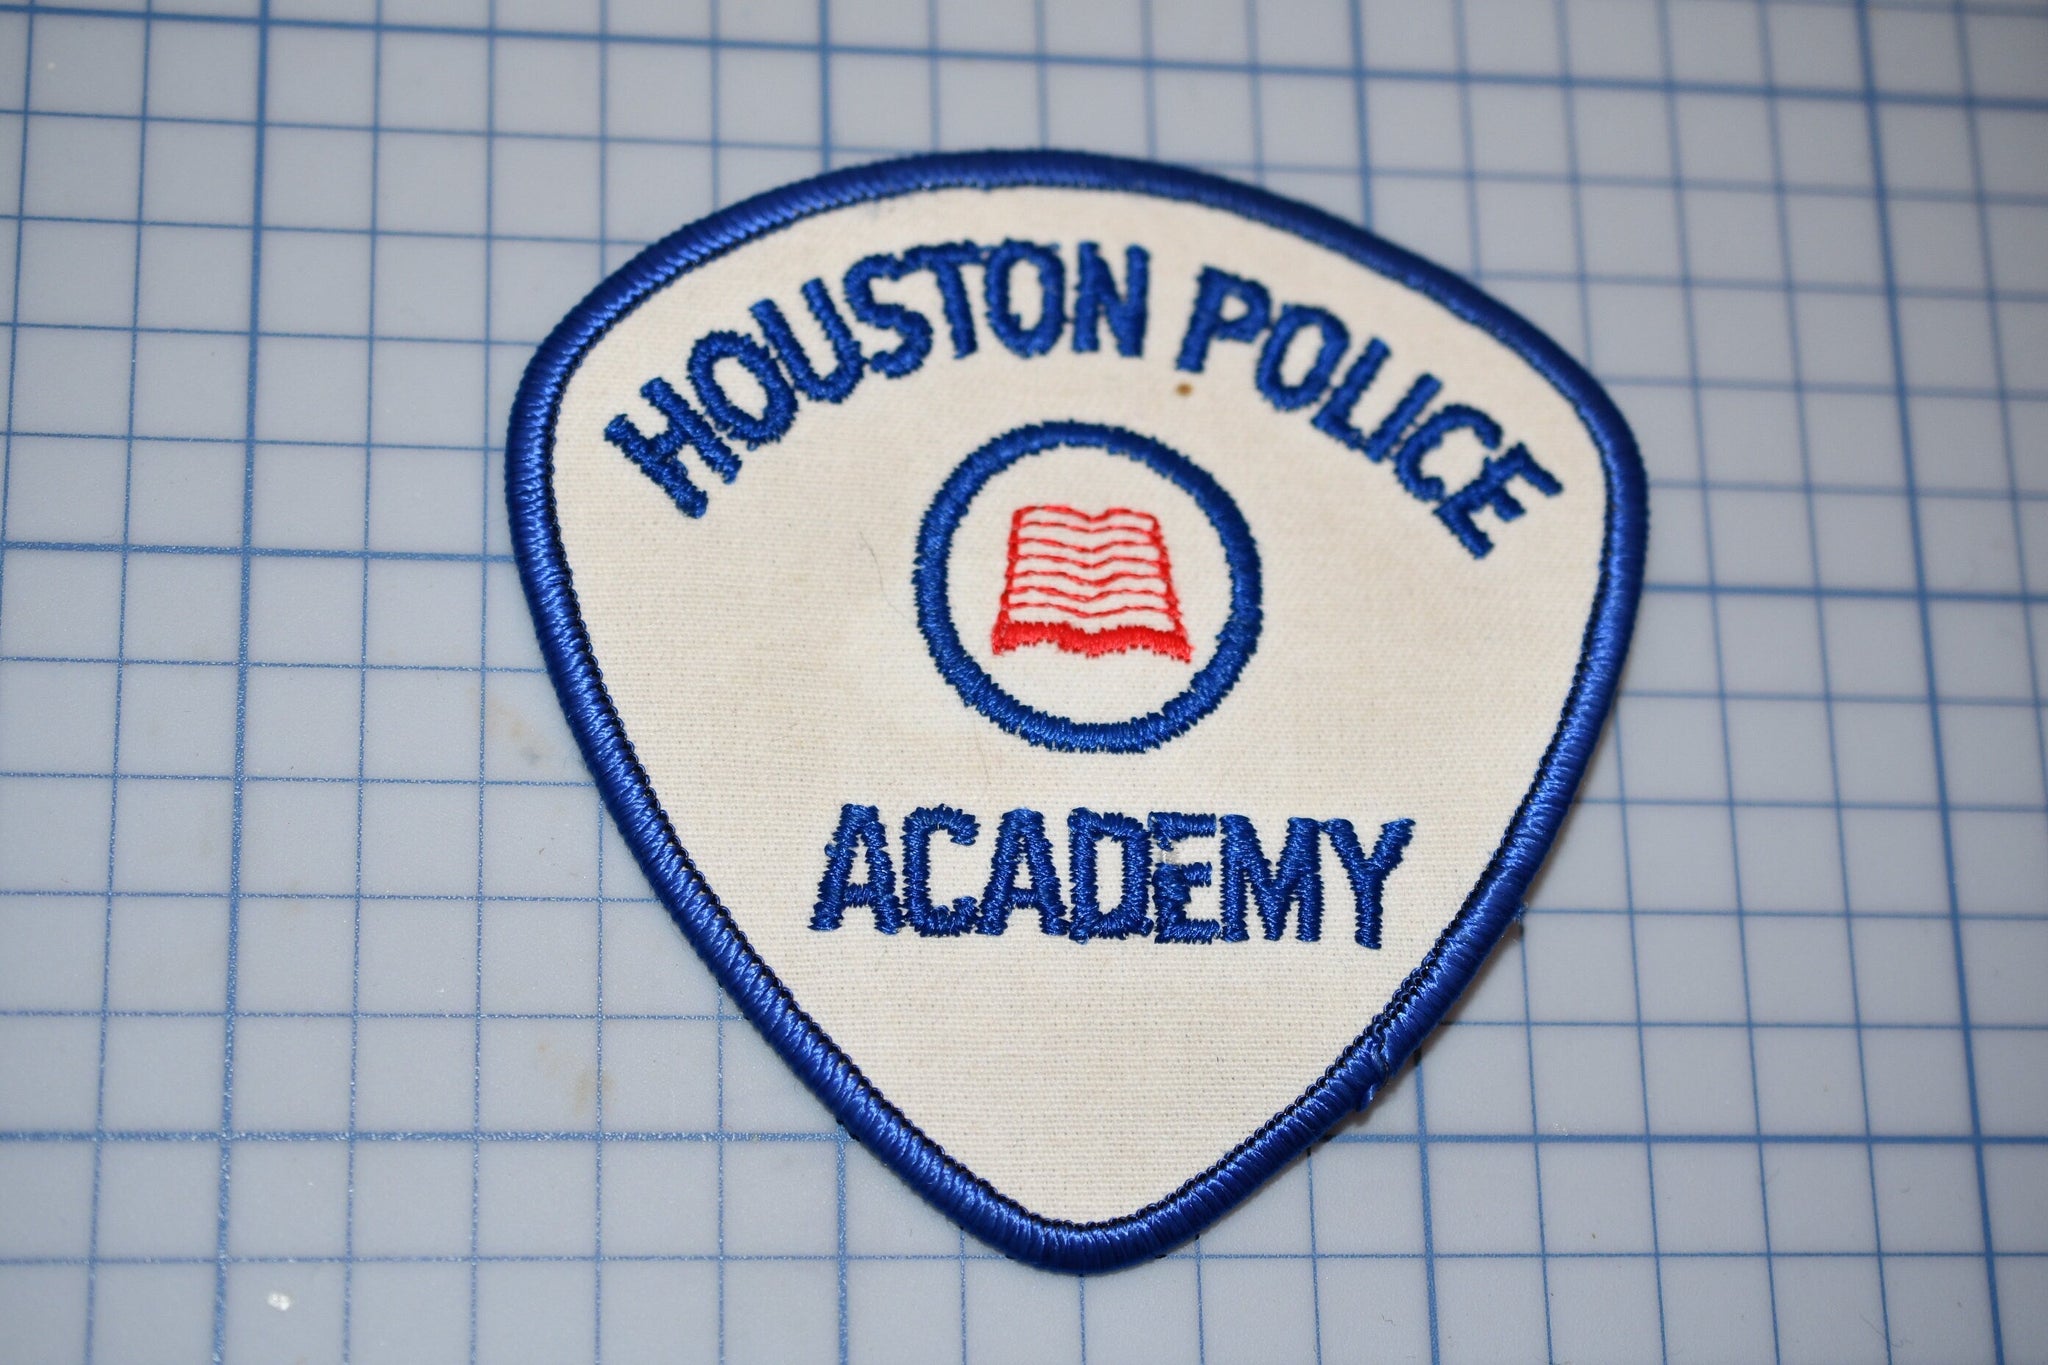 Houston Texas Police Academy Patch (S4-295)